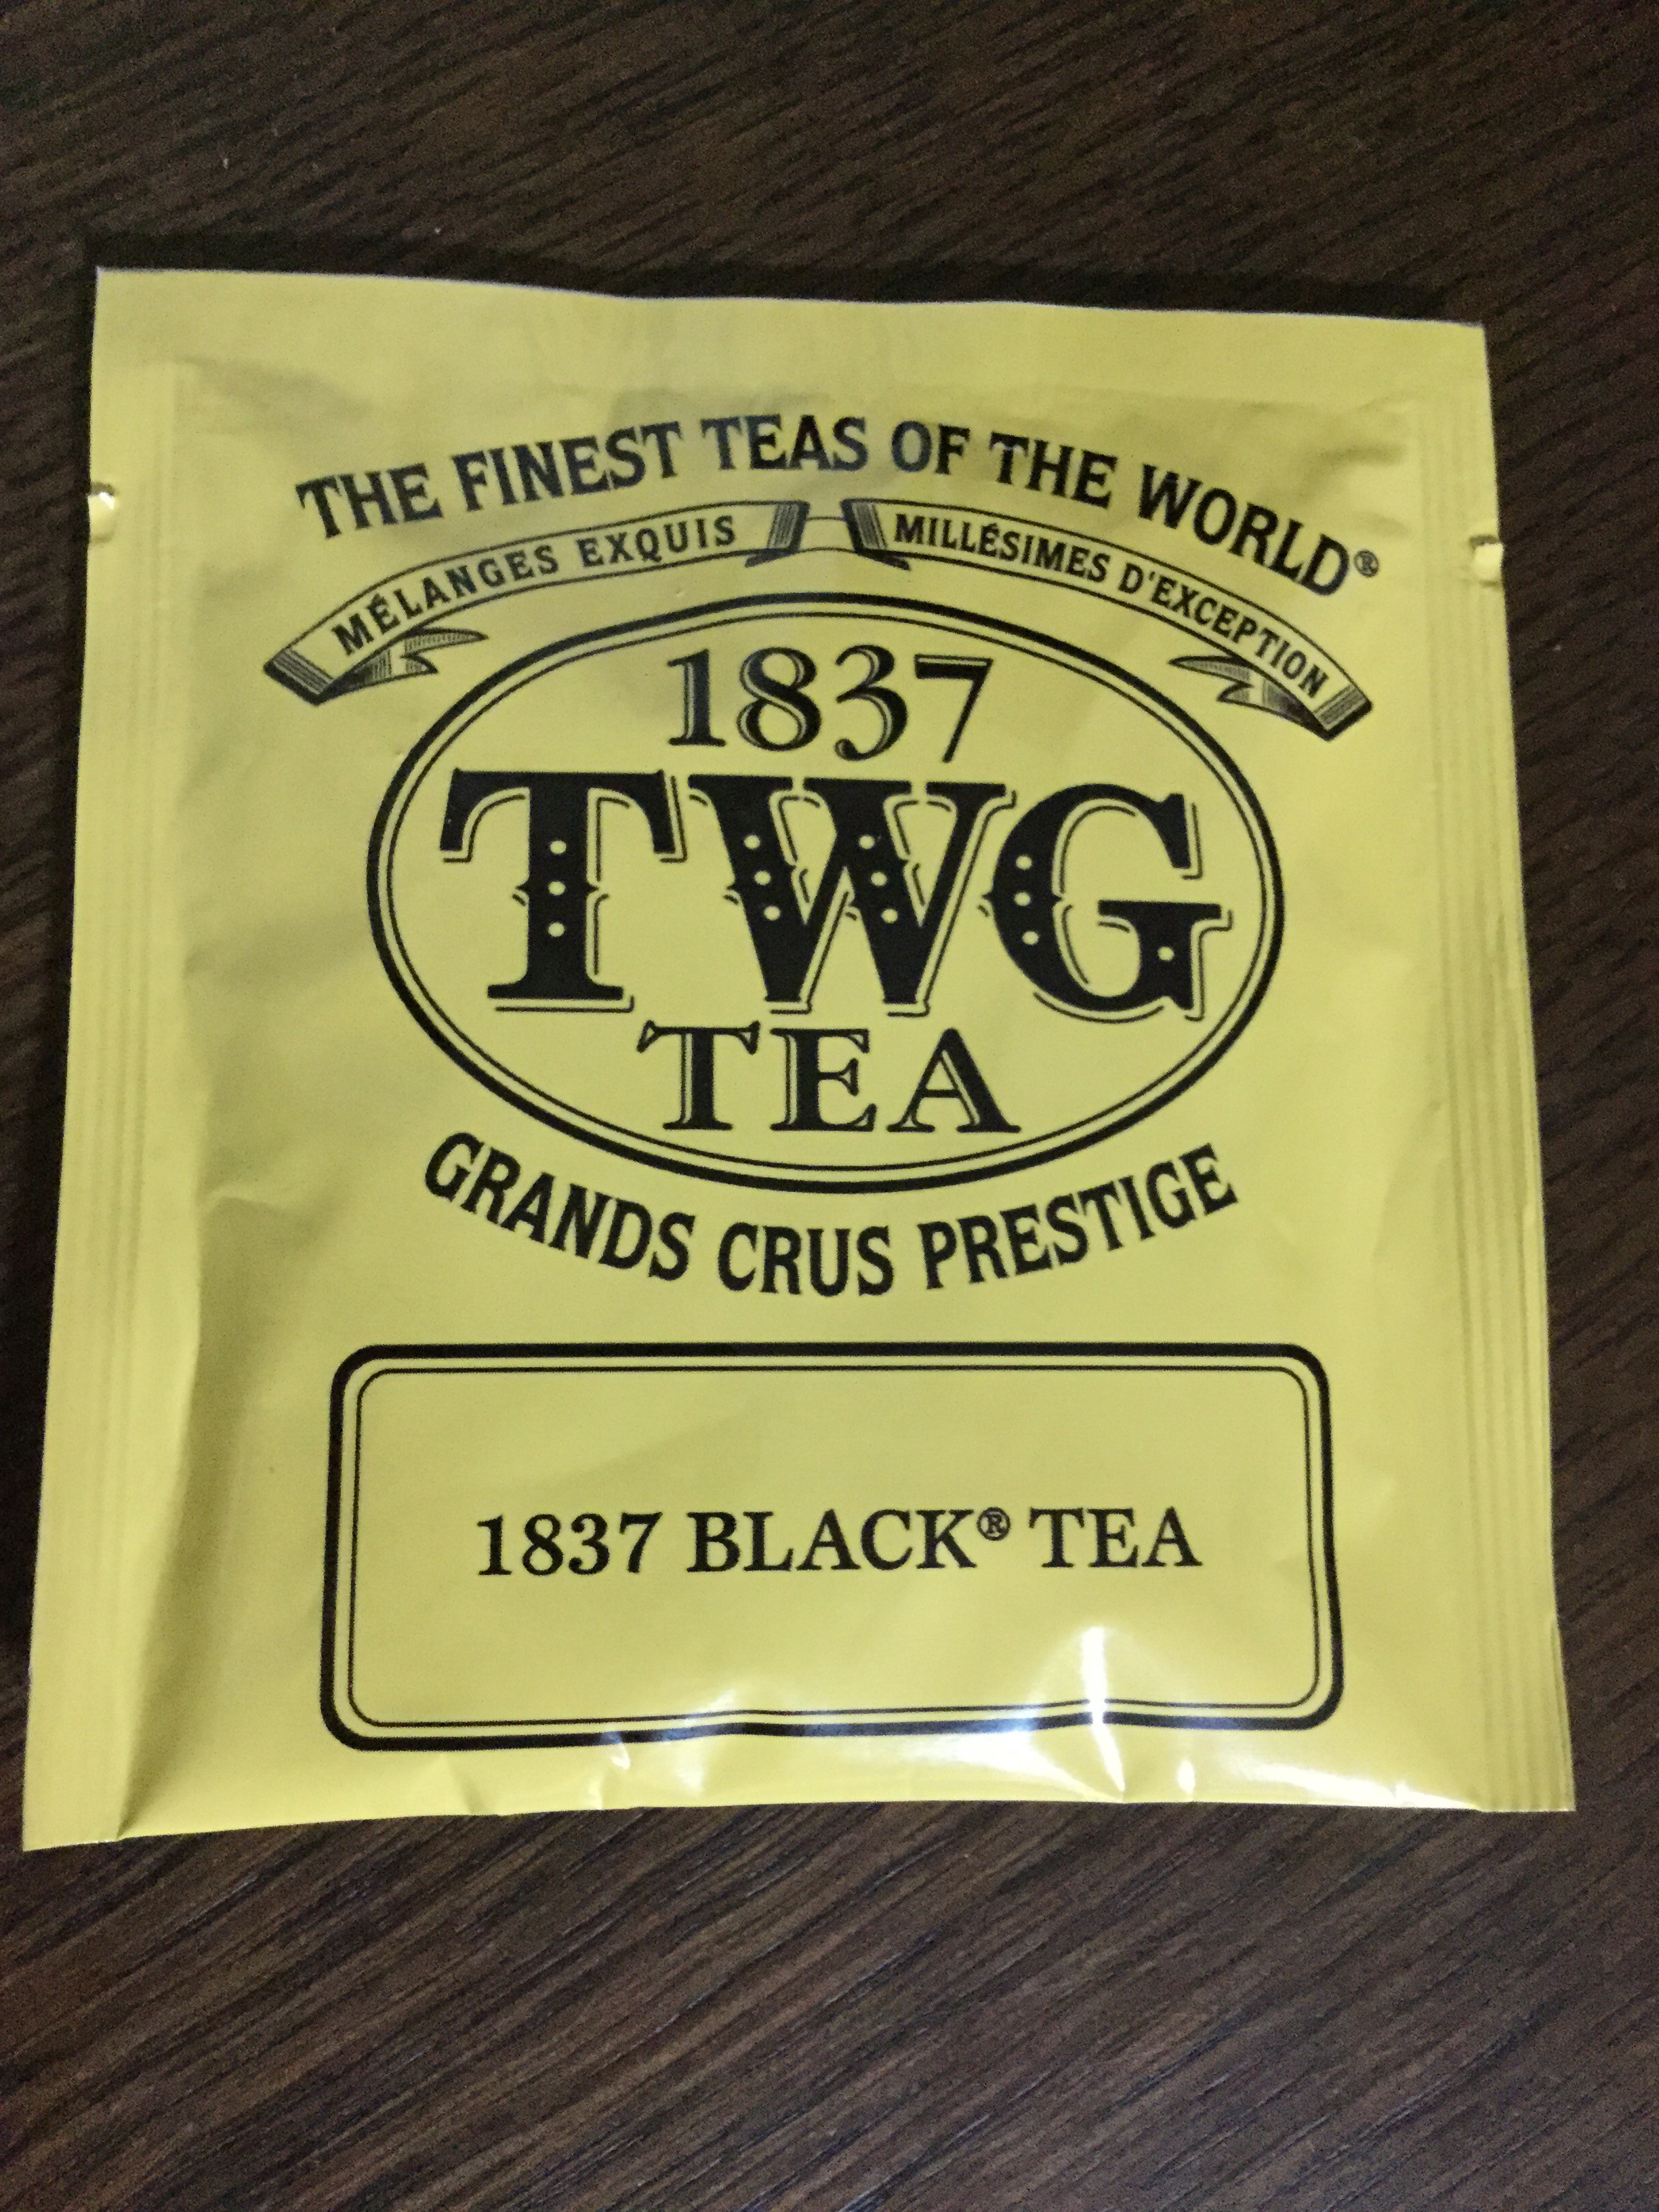 Twgの紅茶を初めて飲みました